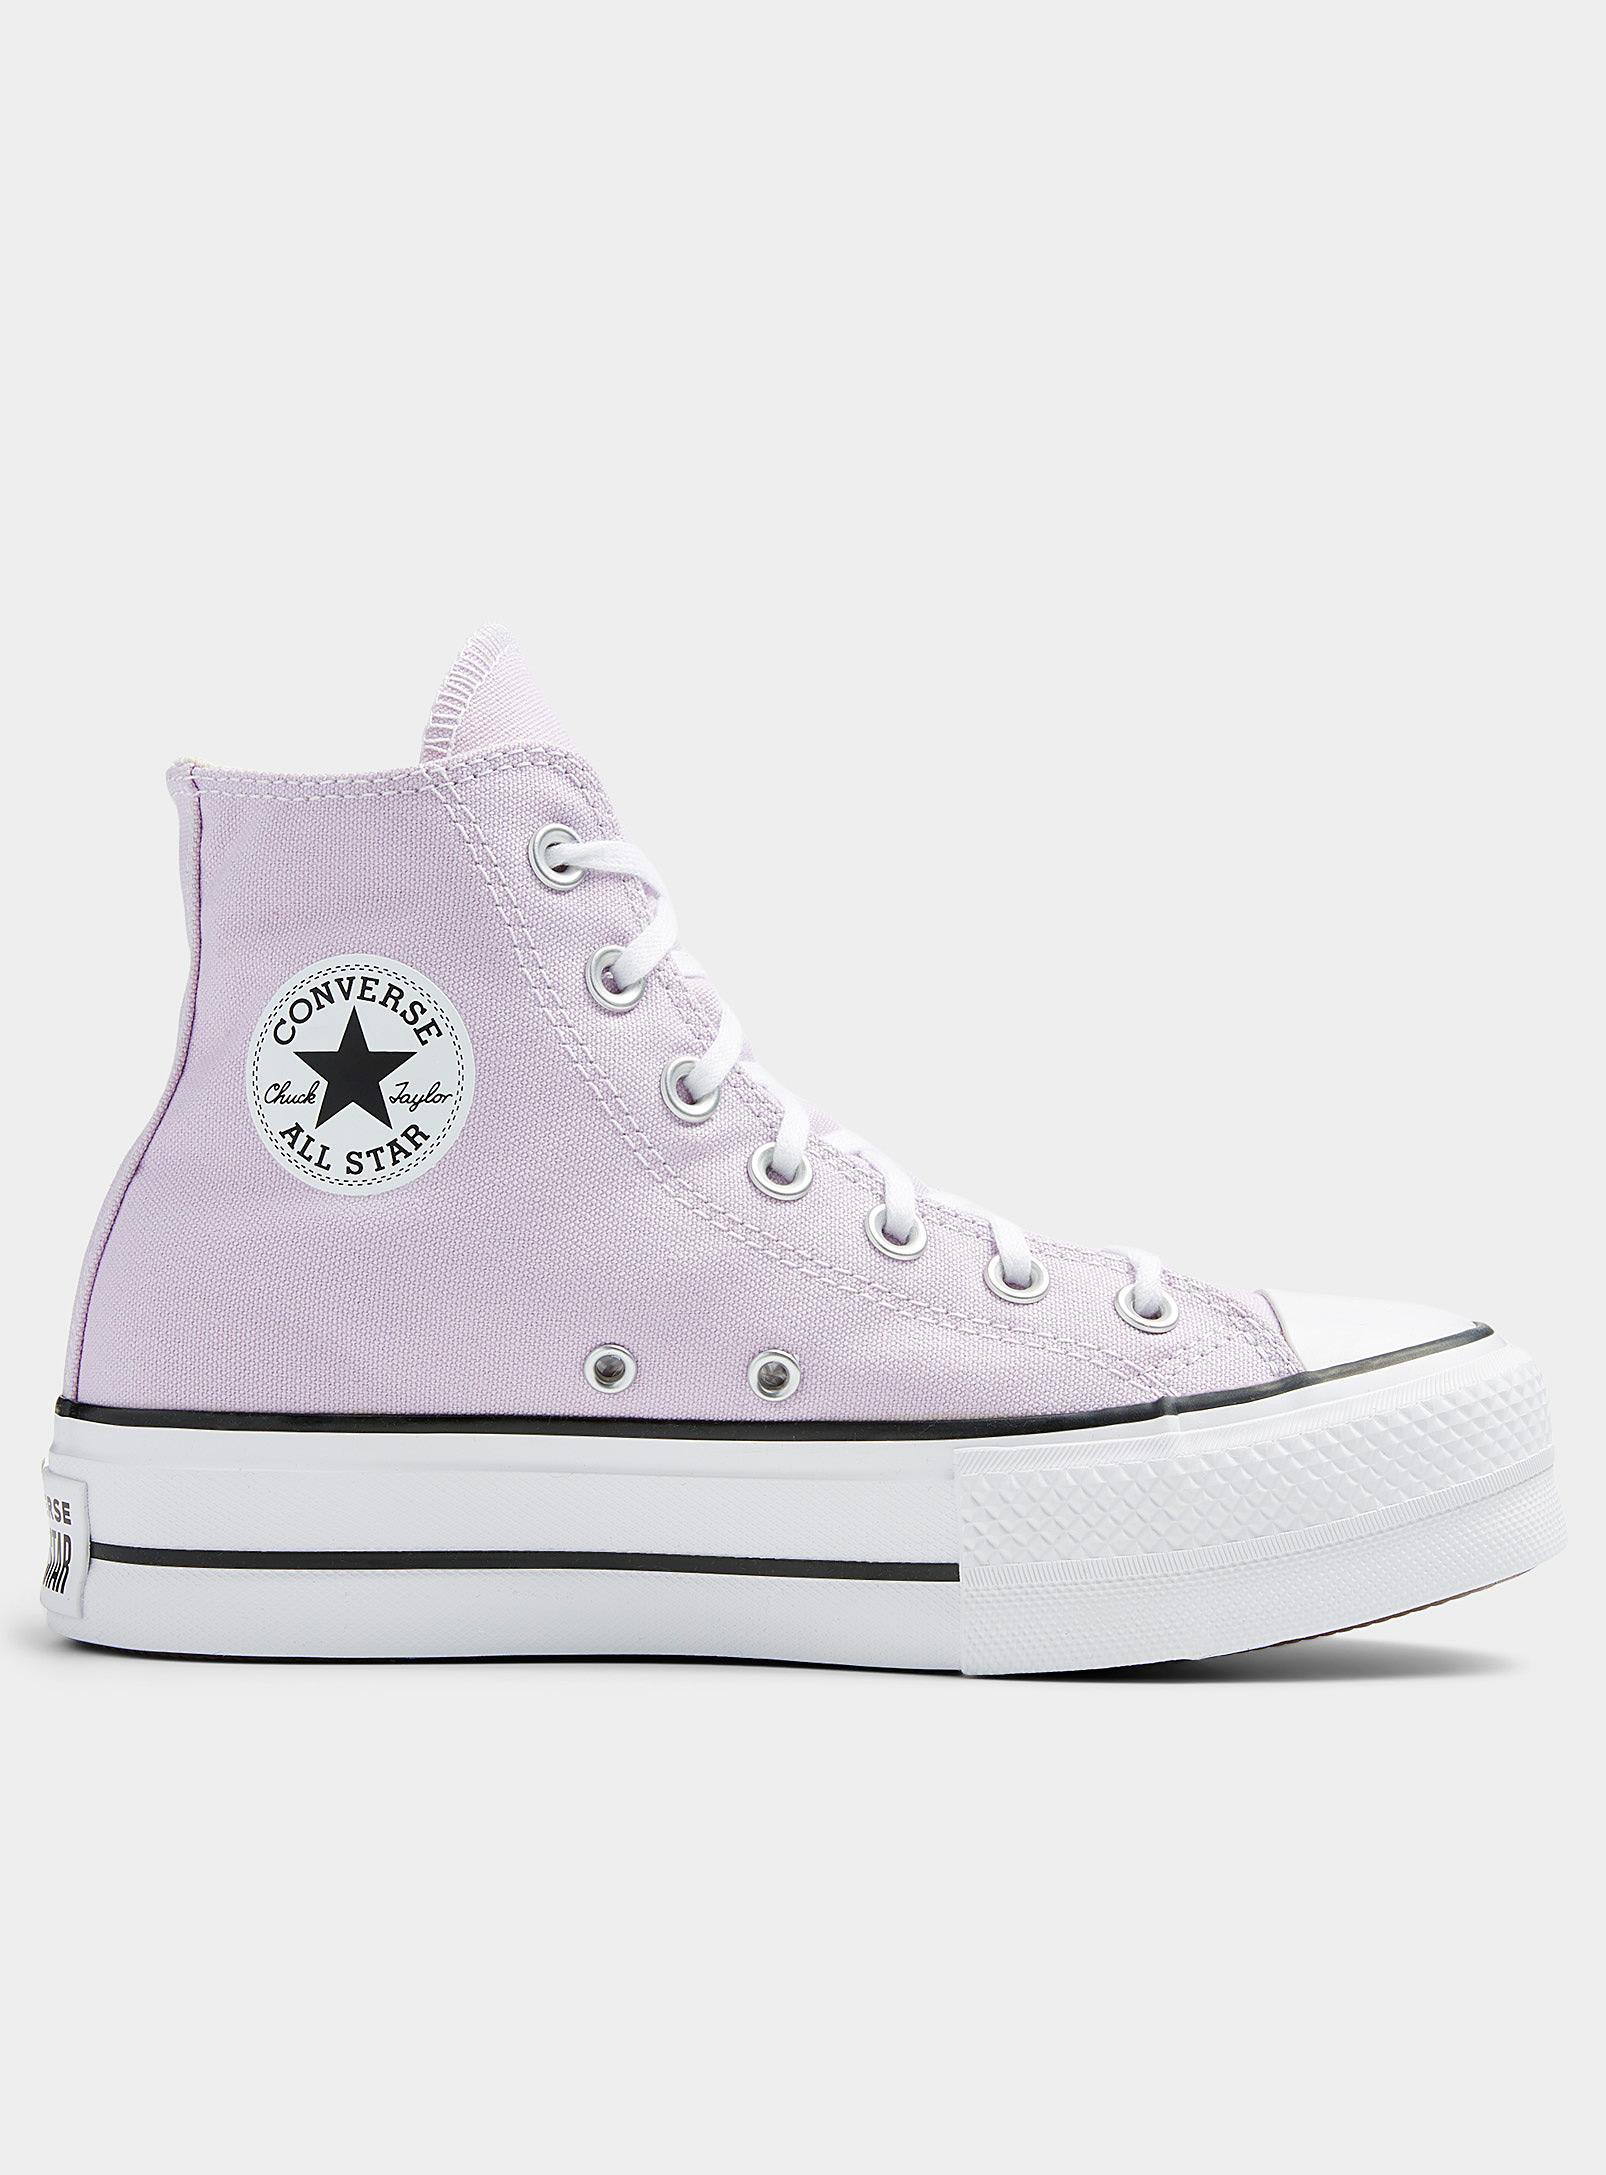 Converse Chuck Taylor All Star High Top Amethyst Platform Sneakers Women in  Purple | Lyst